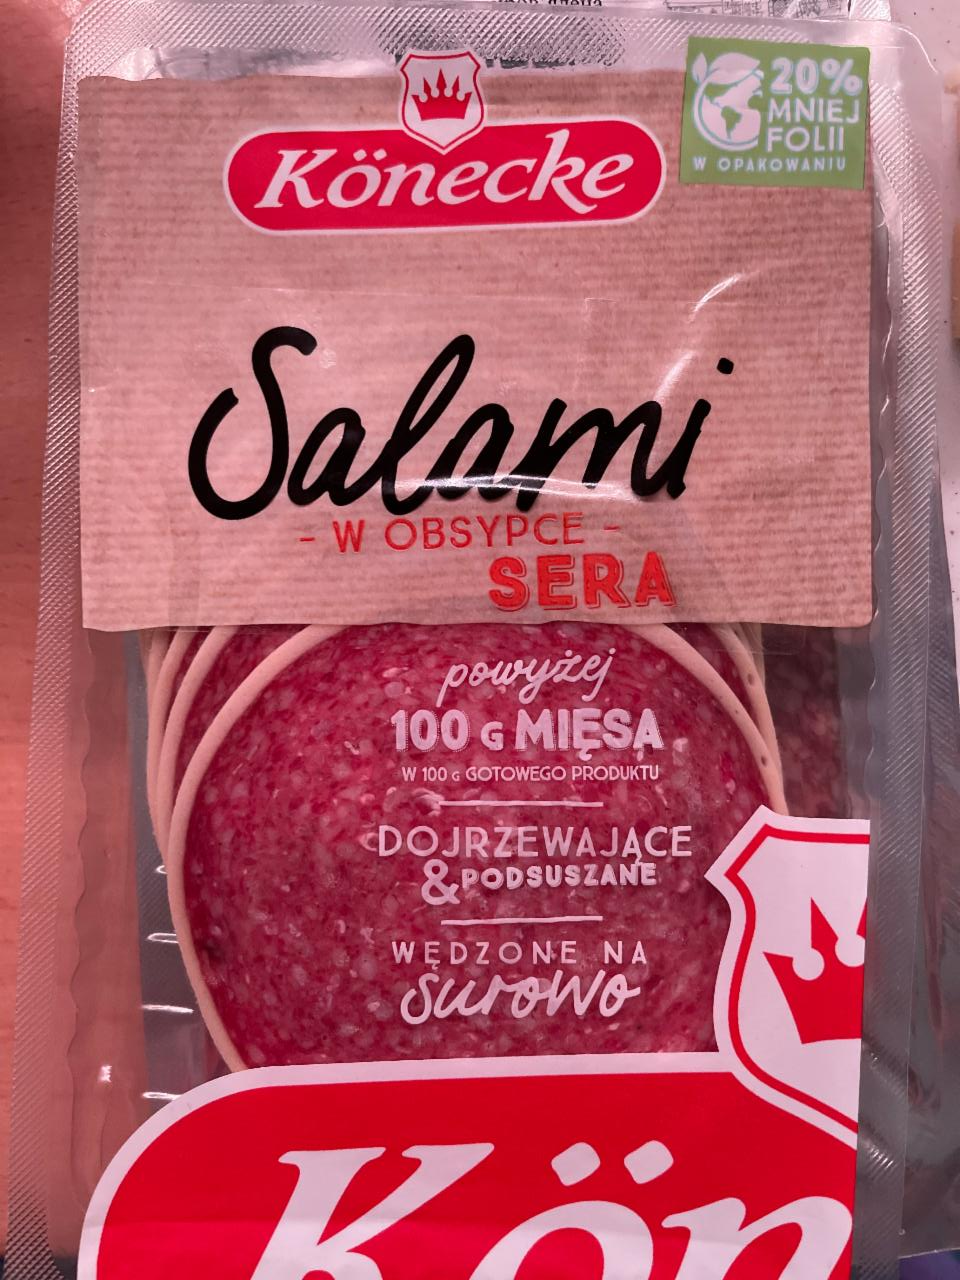 Zdjęcia - Salami w obsypce sera Konecke